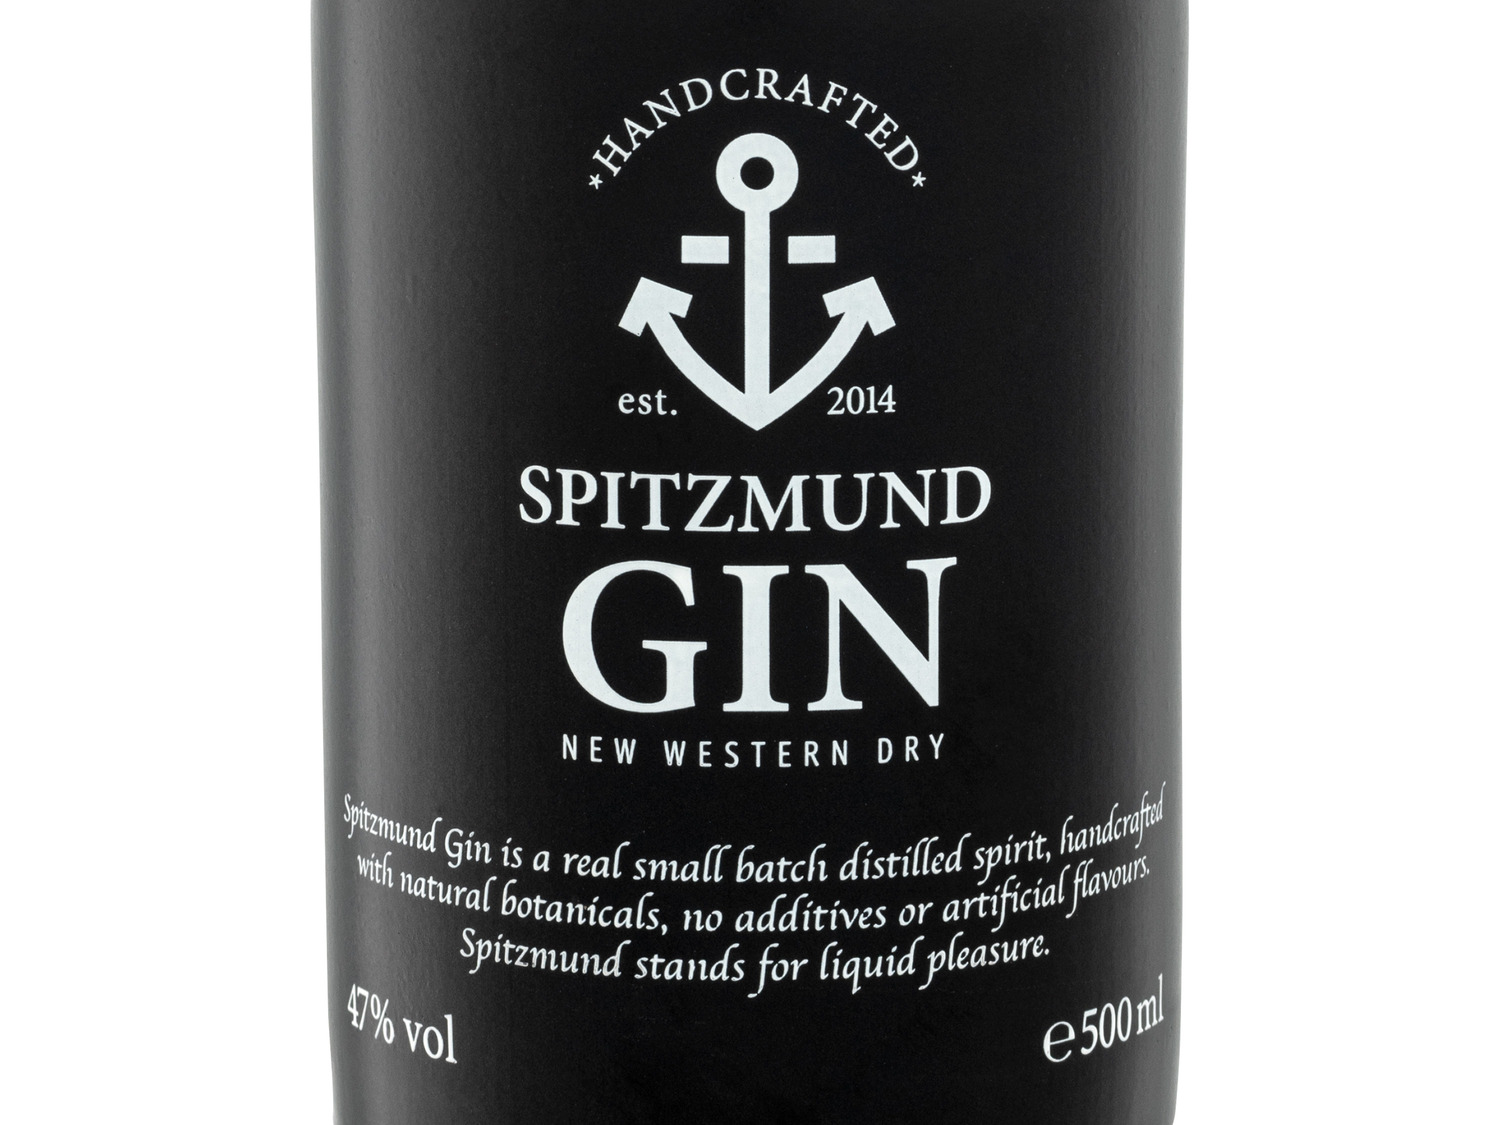 Spitzmund New Western Dry Gin 47% Vol | LIDL